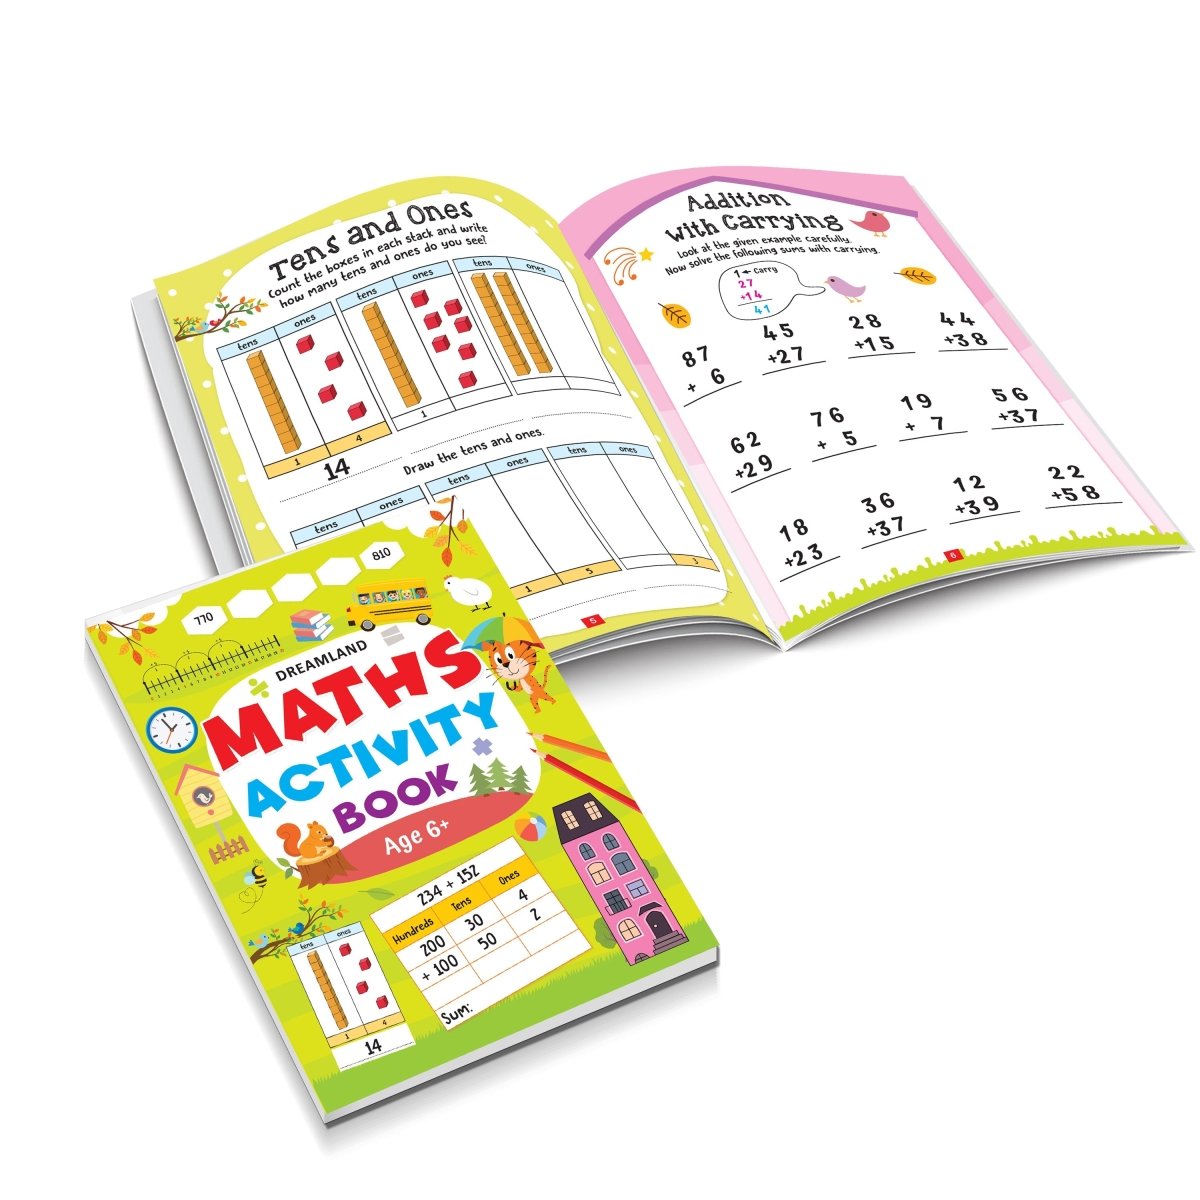 Dreamland Publications Maths Activity Book Age 6+ - 9789395588041